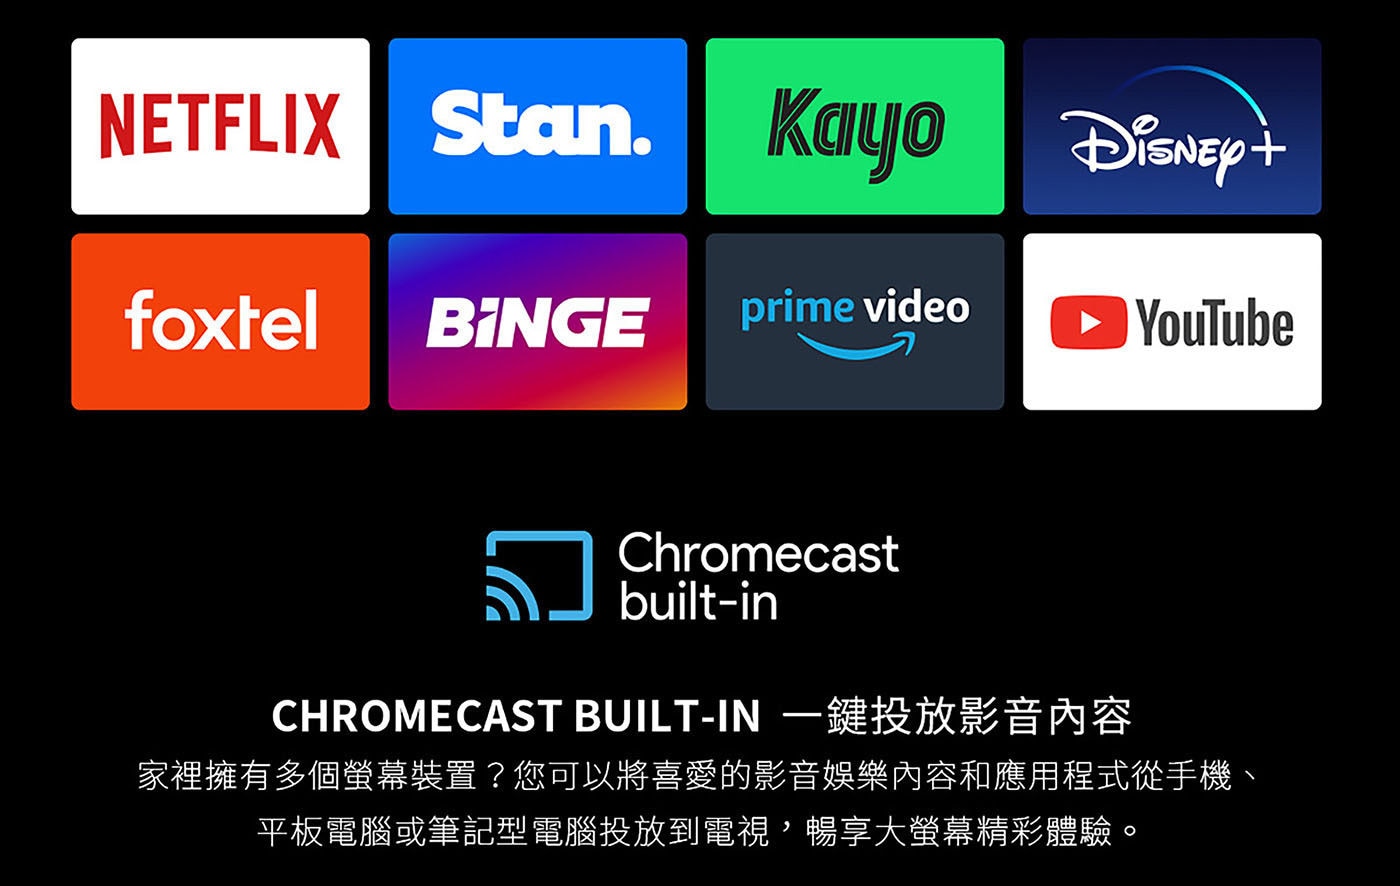 TCL 50吋 4K UHD Google TV 電視Chromecast built-in一鍵投放影音內容